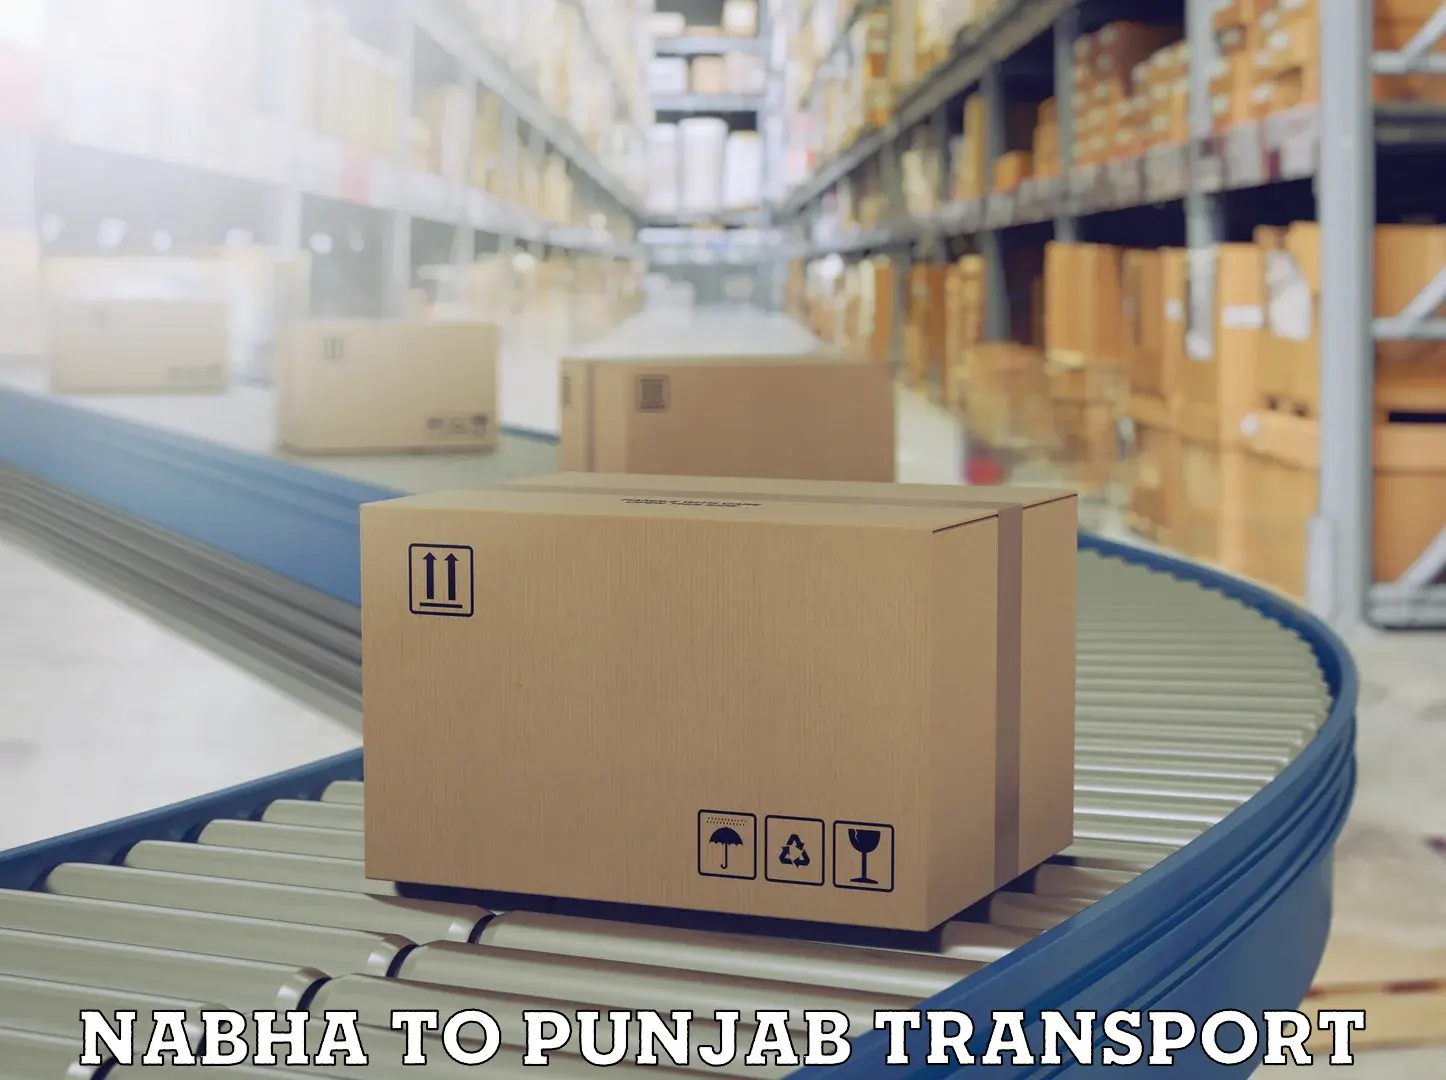 Daily transport service Nabha to Punjab